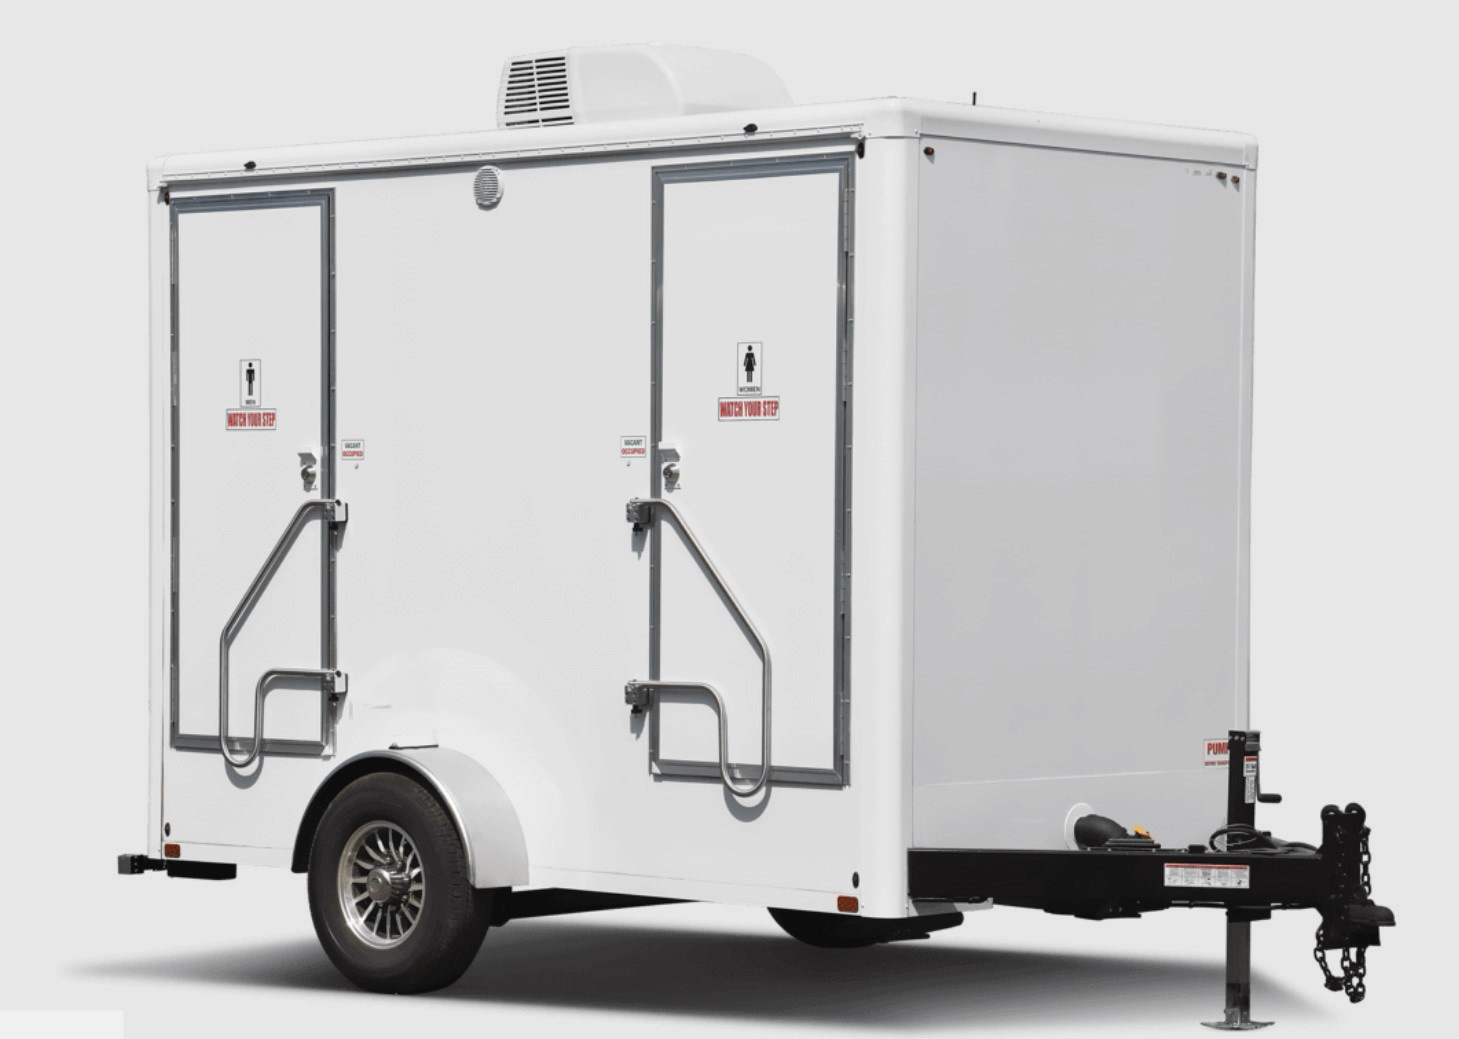 a 2 stall standard restroom trailer